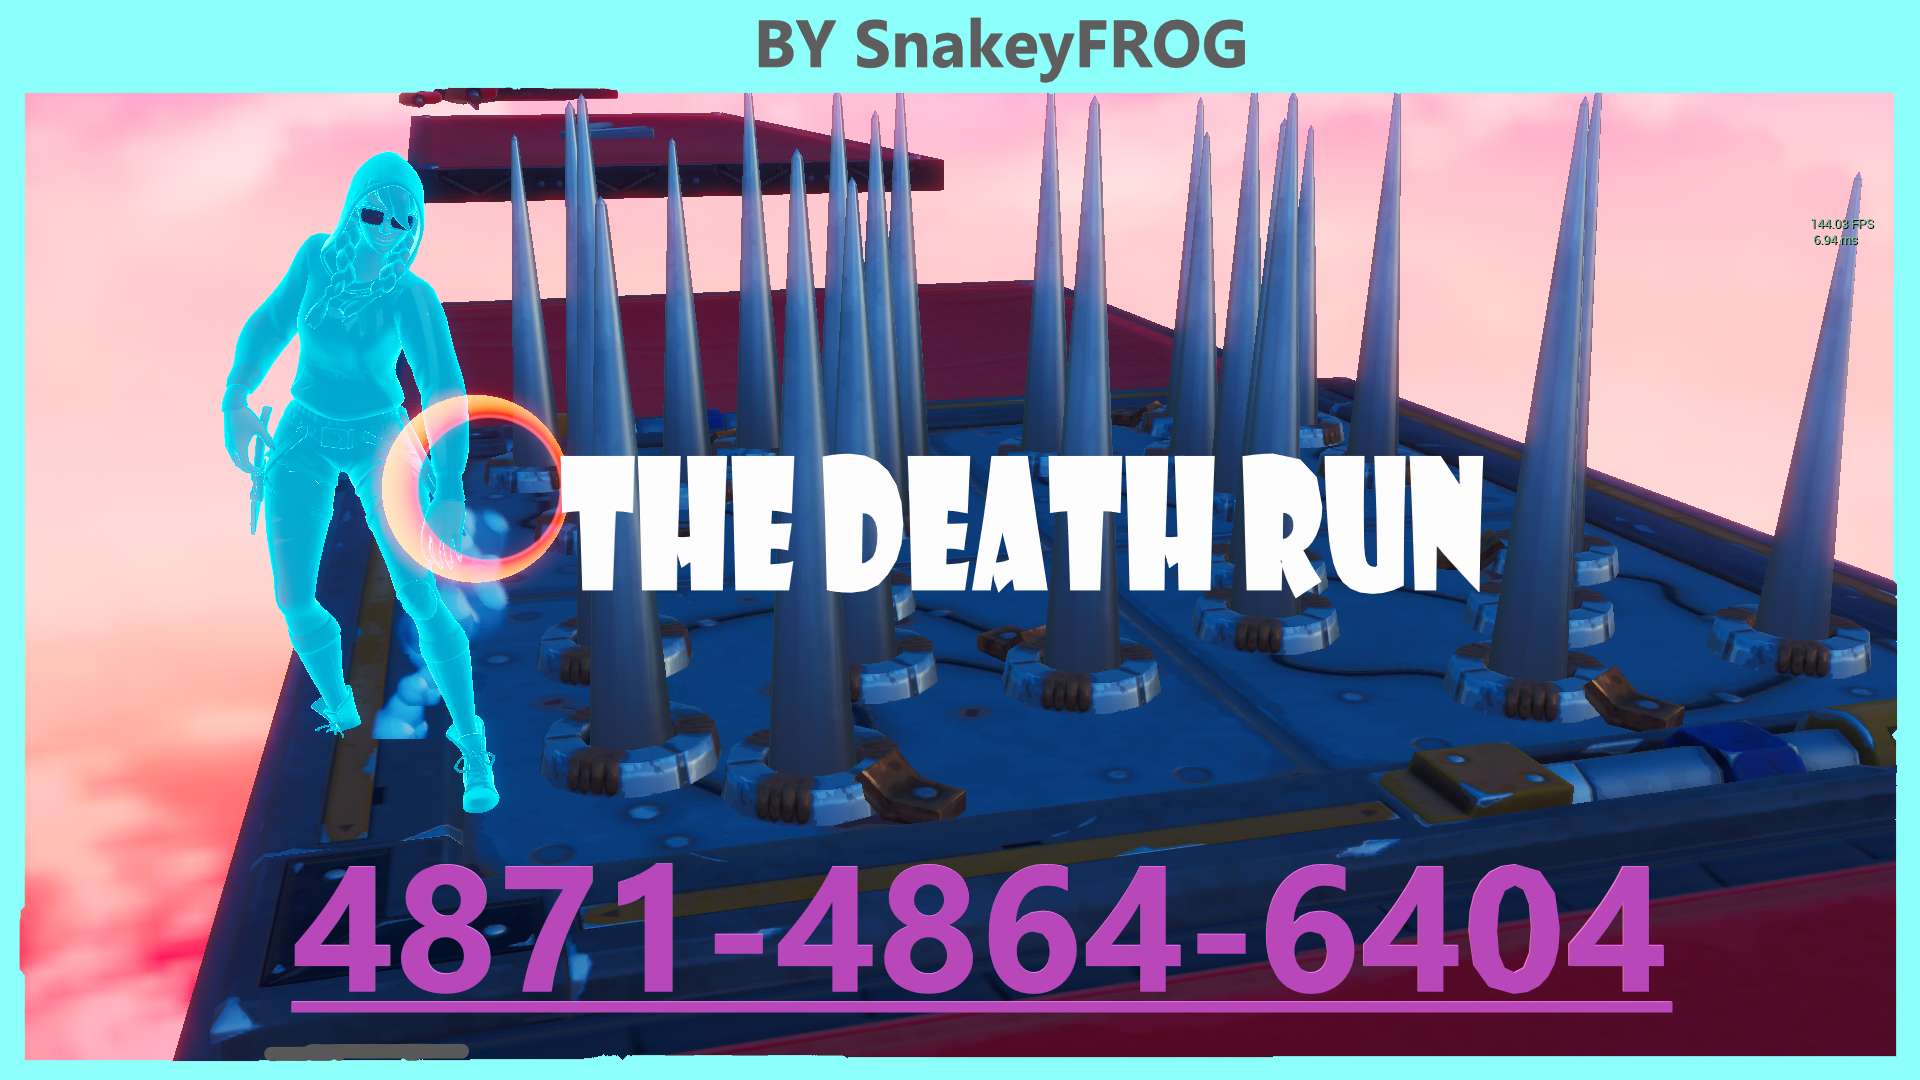 THE DEATH RUN image 2